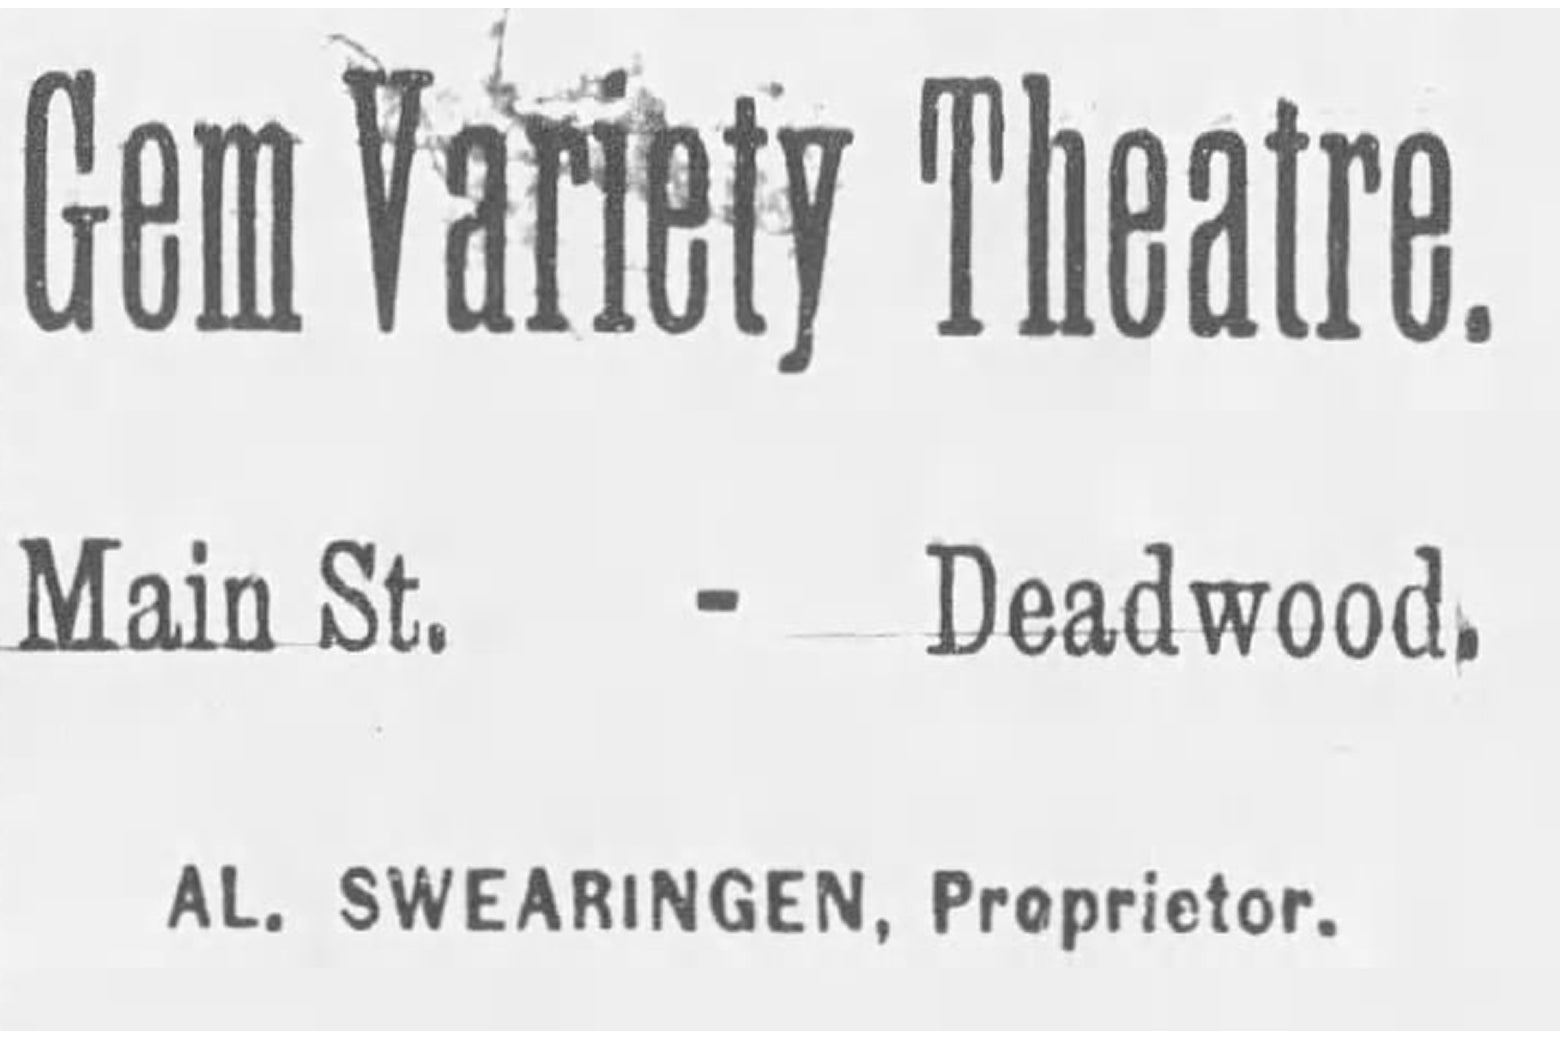 An ad for the Gem Saloon, reading "Gem Variety Theatre. Main St. - Deadwood. Al Swearingen, Proprietor."